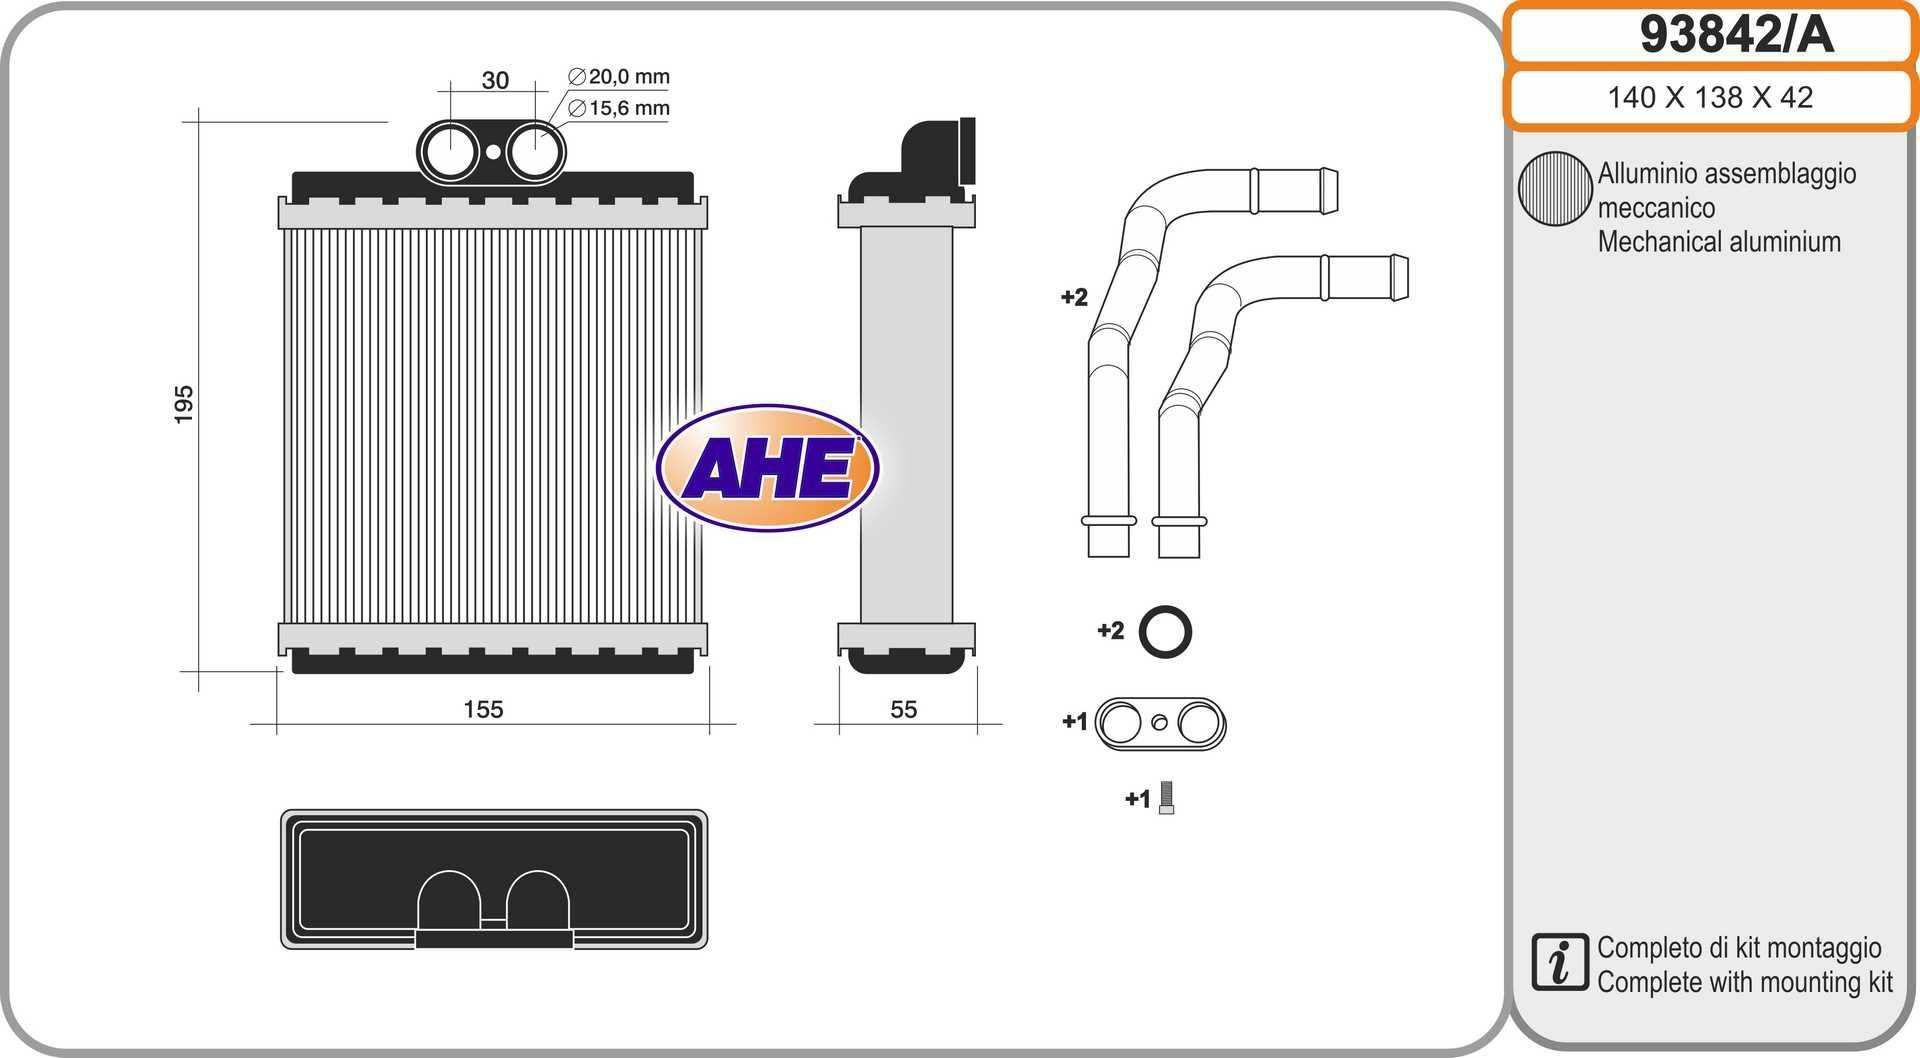 Suzuki Heater matrix AHE 93842/A at a good price